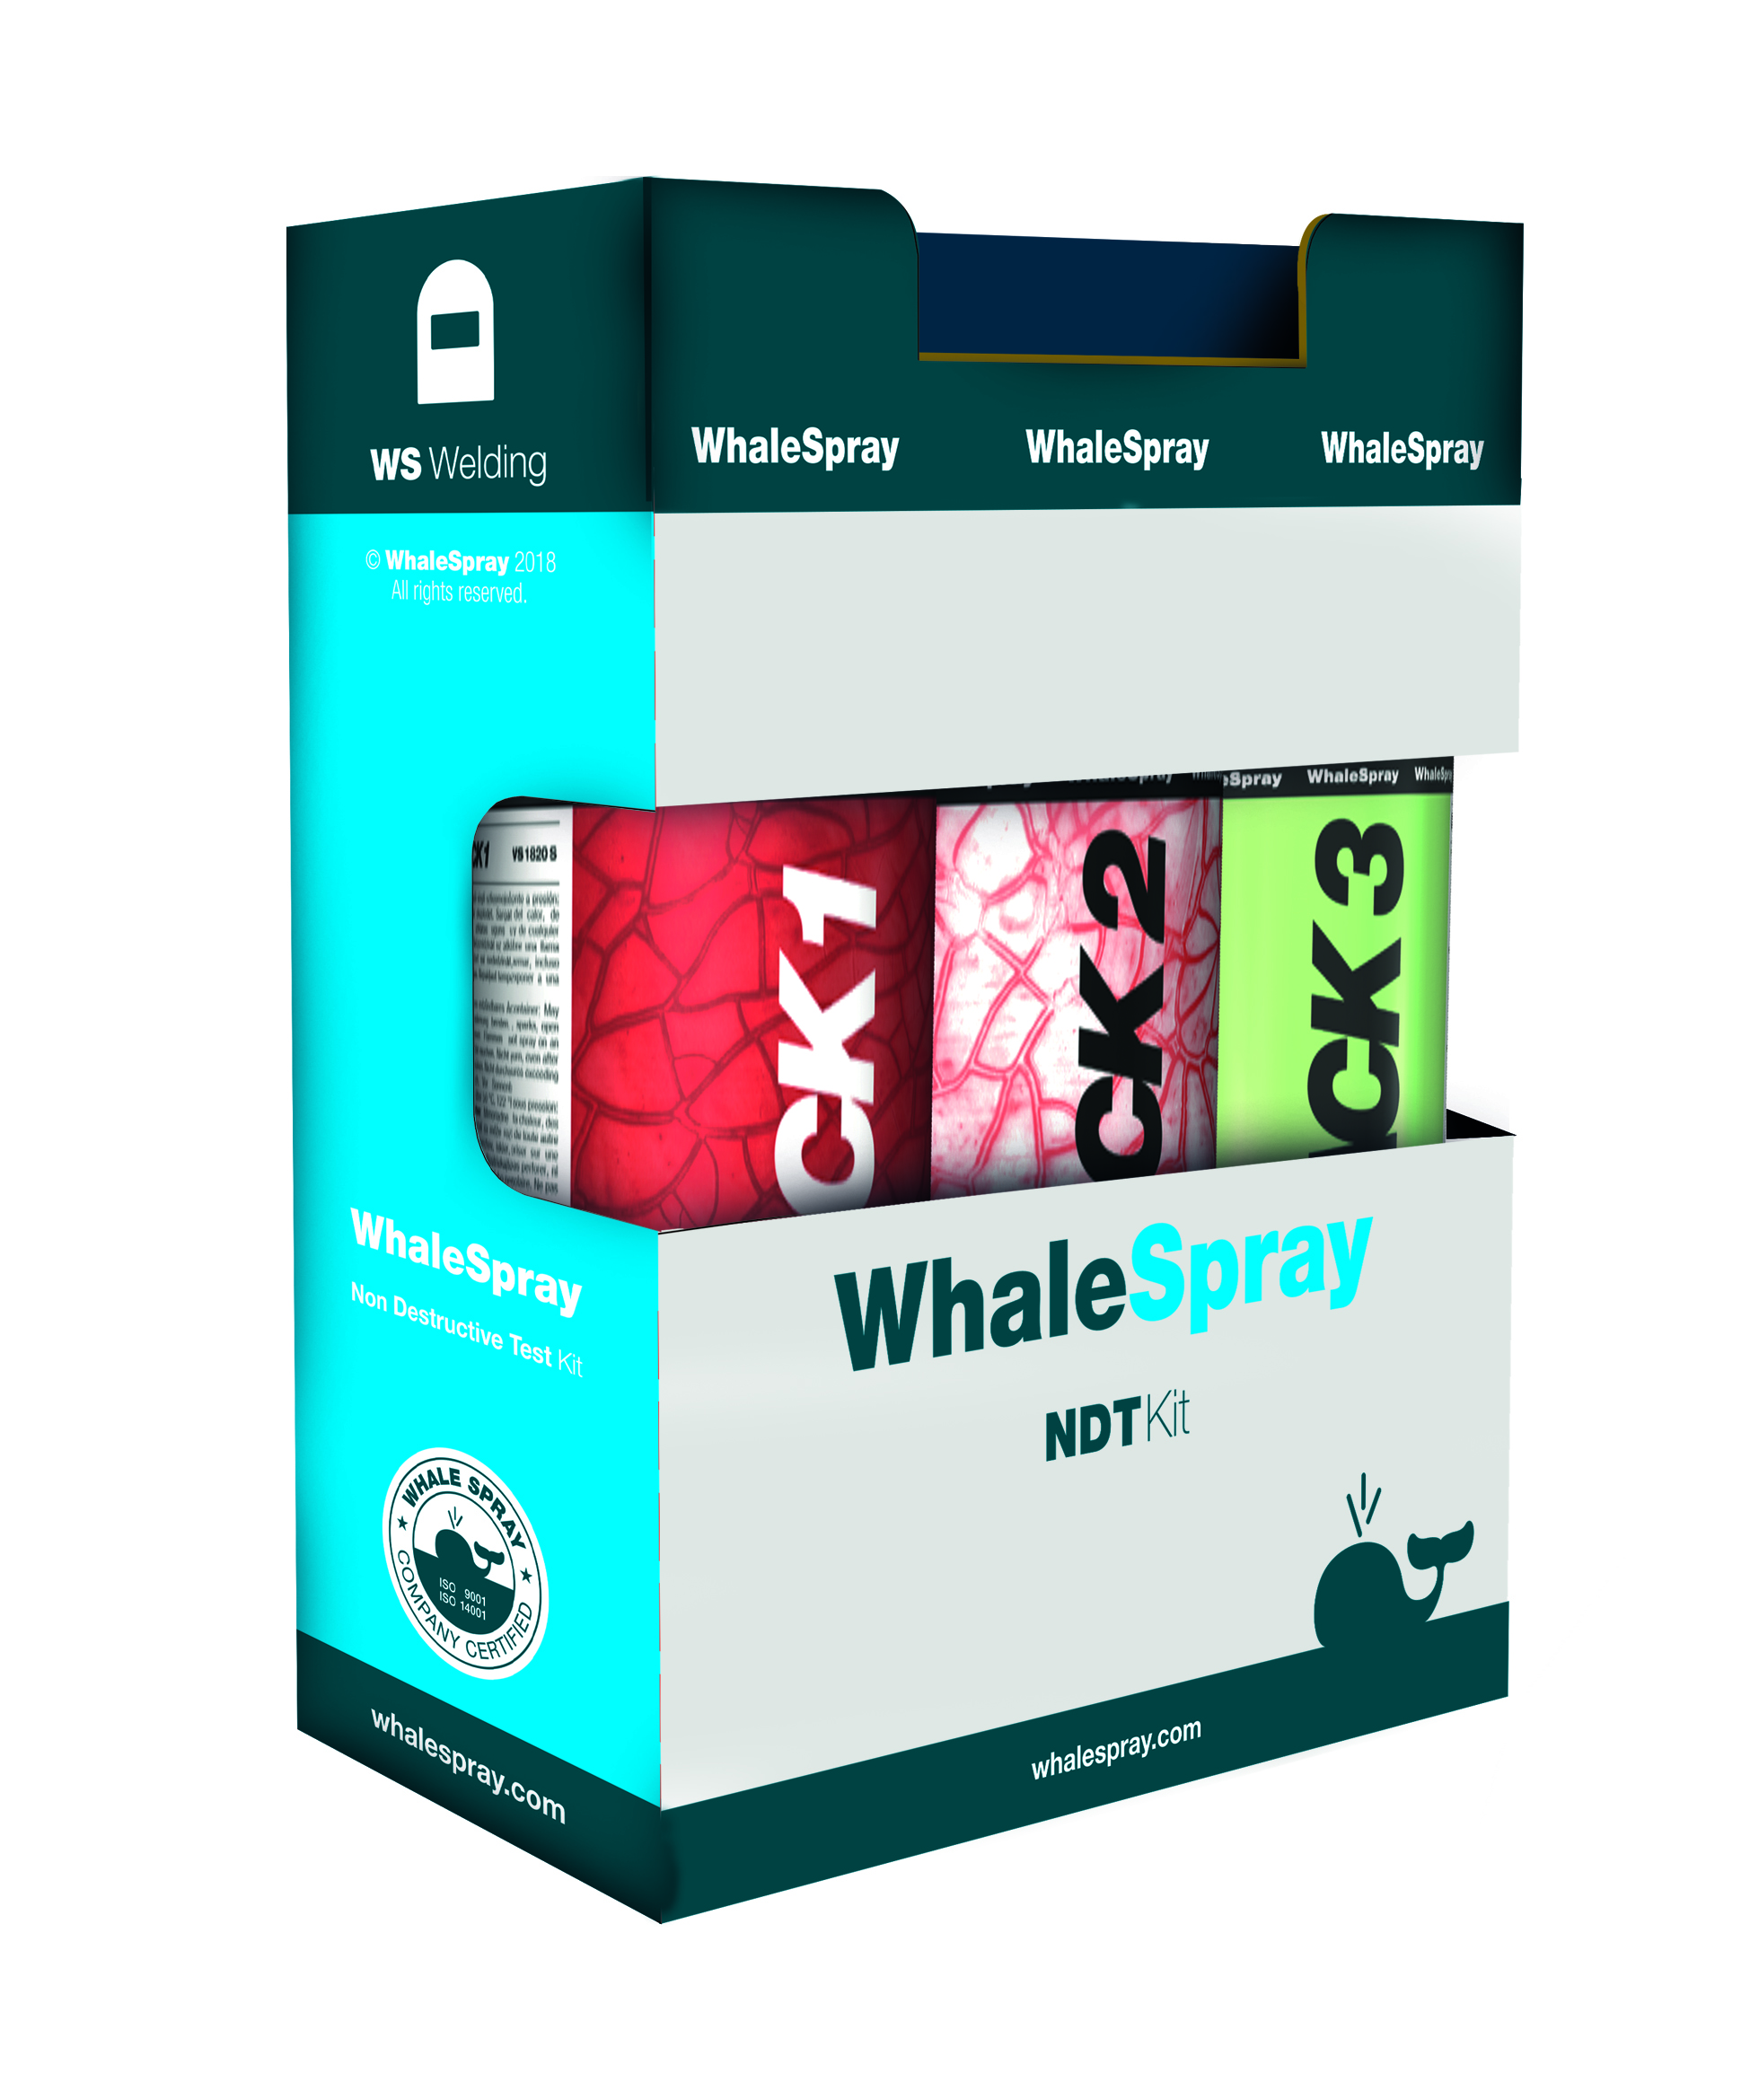 KIT tintas penetrantes WhaleSpray Crack 1-2-3 CST-WS-NDT-KIT